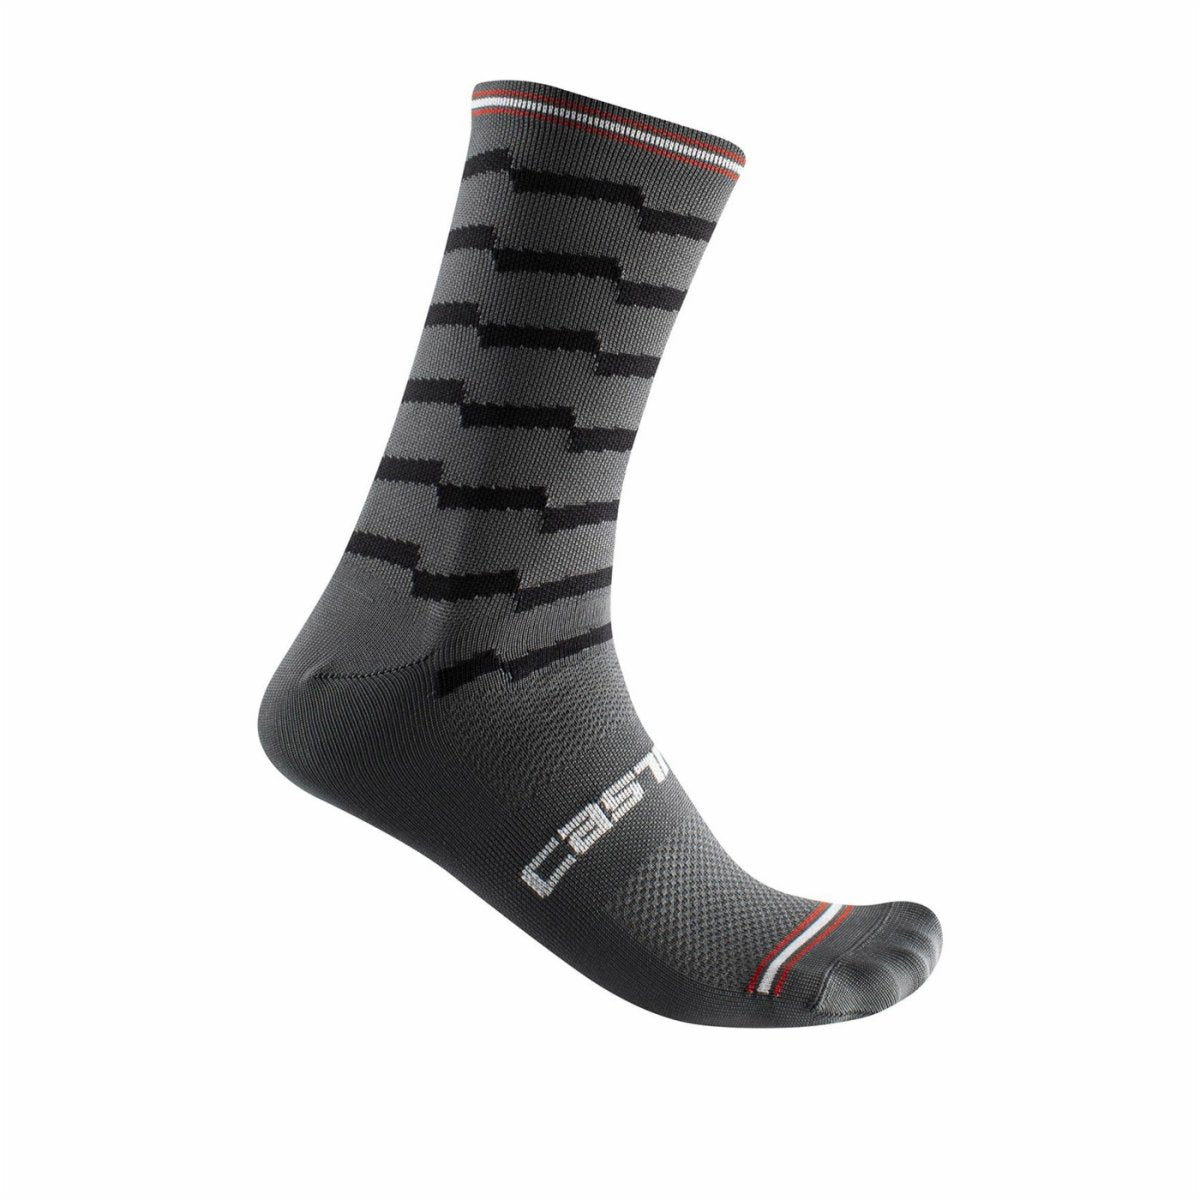 Castelli Unlimited 18 Men's Cycling Socks (Dark Gray /Black)